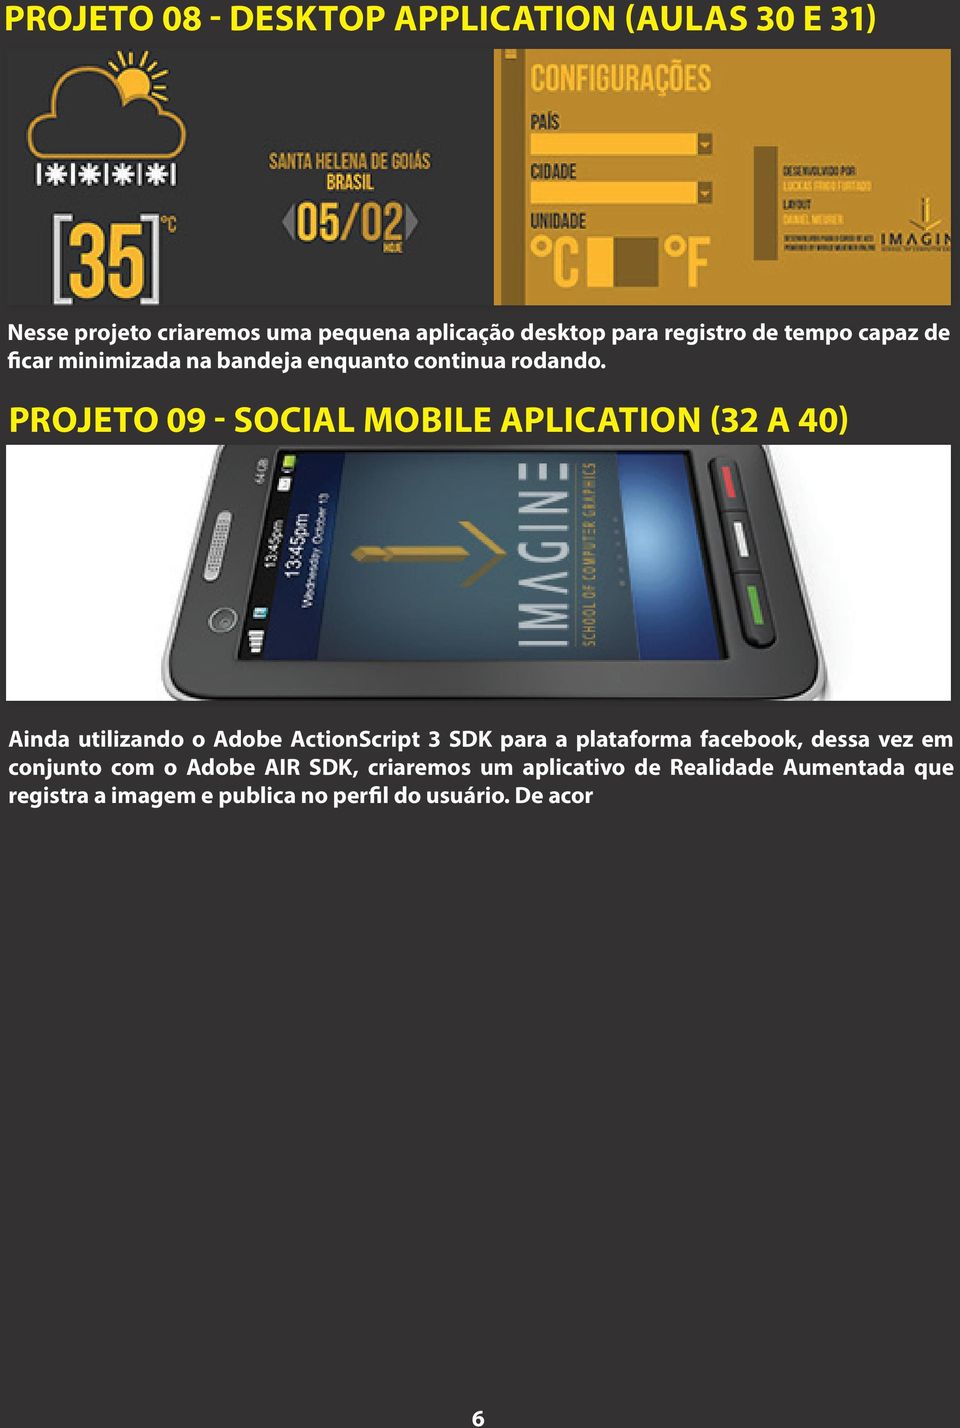 projeto 09 - social mobile aplication (32 a 40) ainda utilizando o adobe actionscript 3 sdk para a plataforma